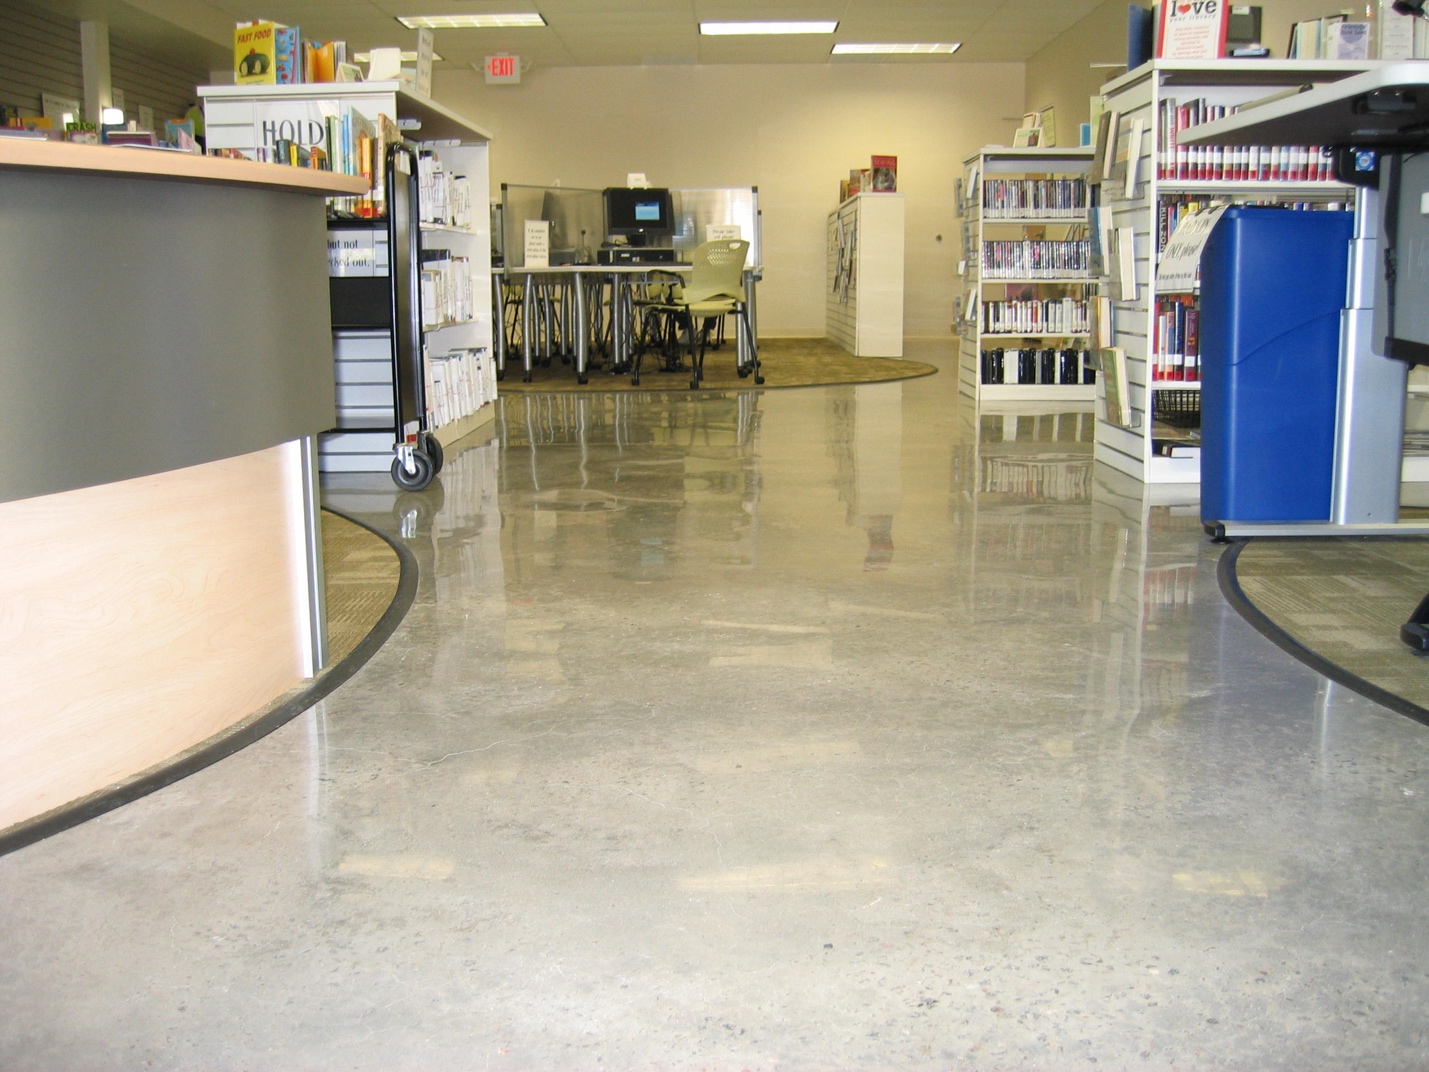 Concrete Floor Solutions